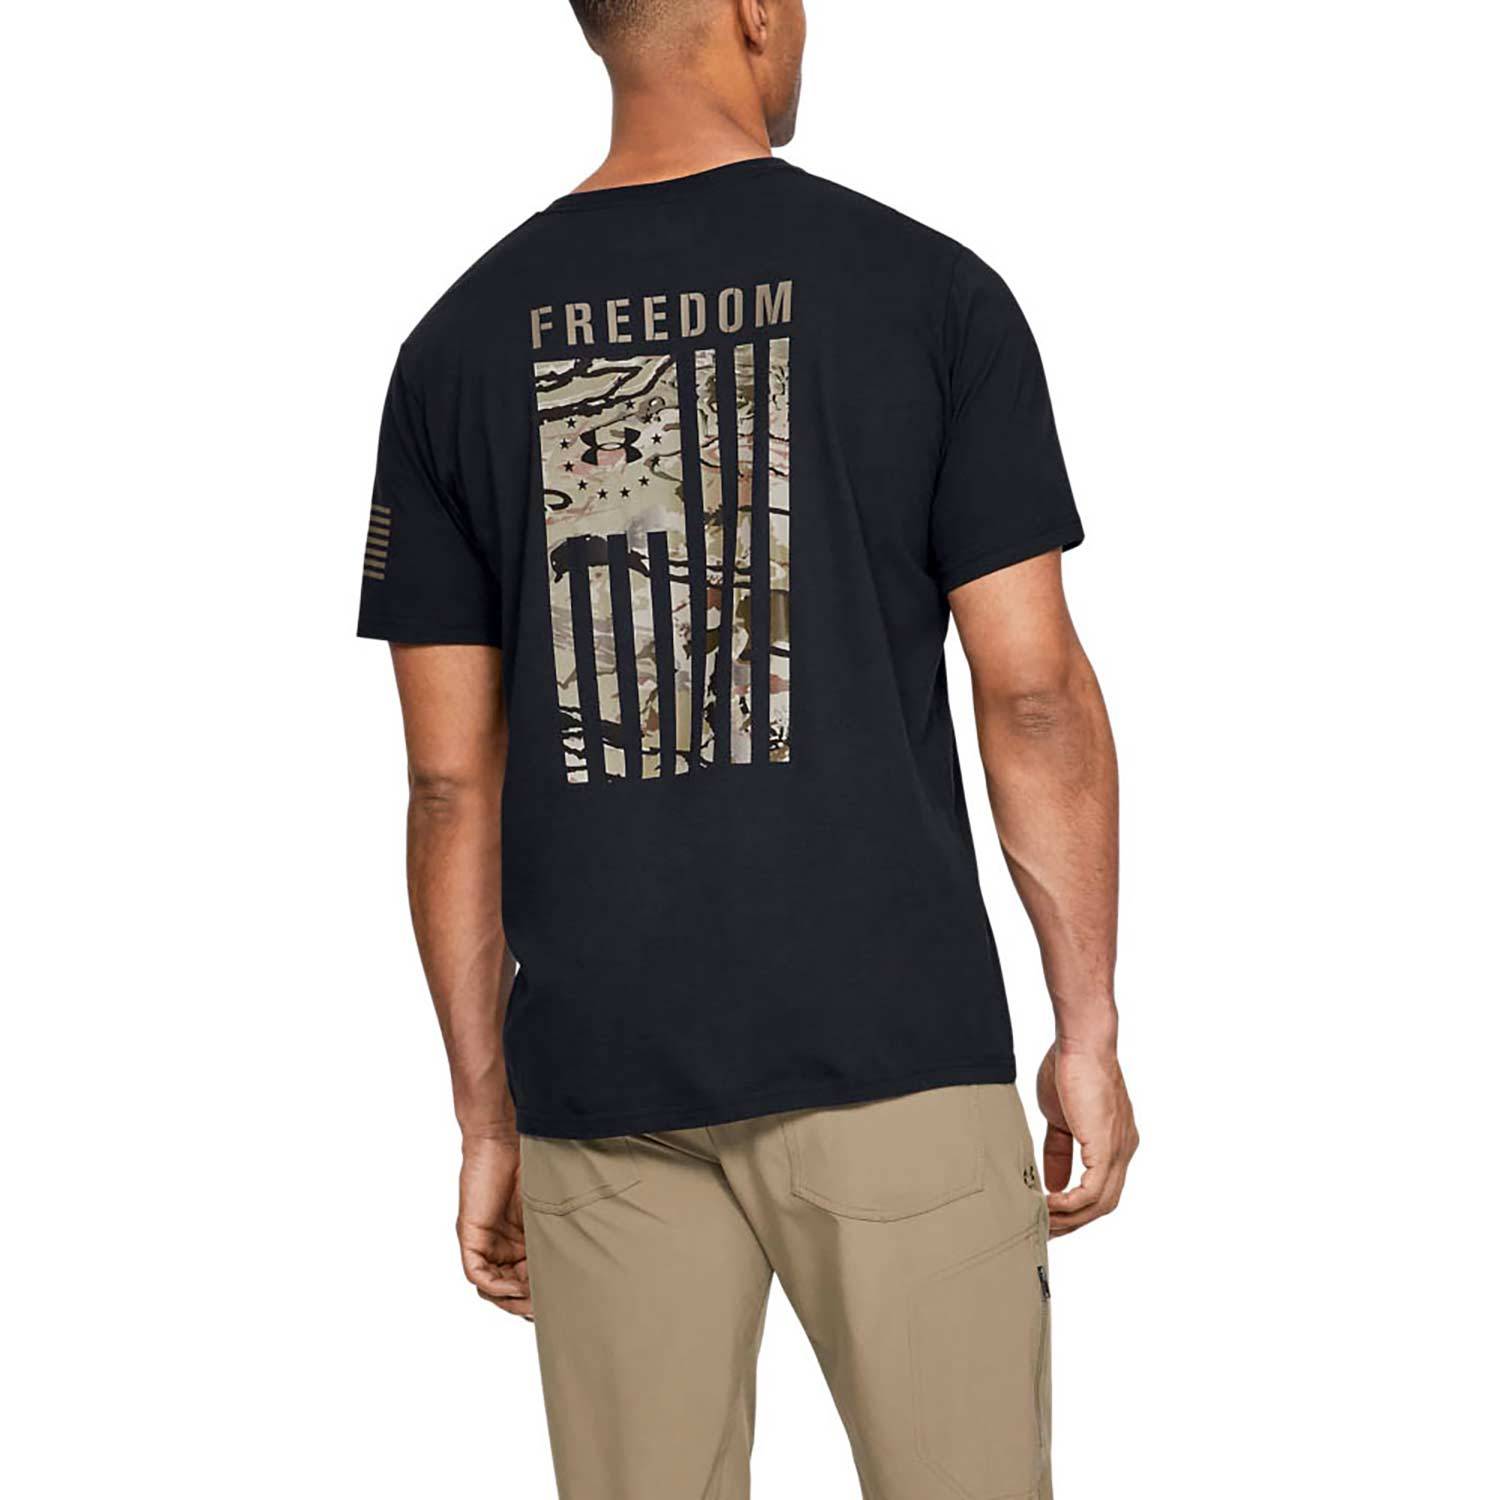 Under Armour Freedom Flag Camo Graphic T-Shirt